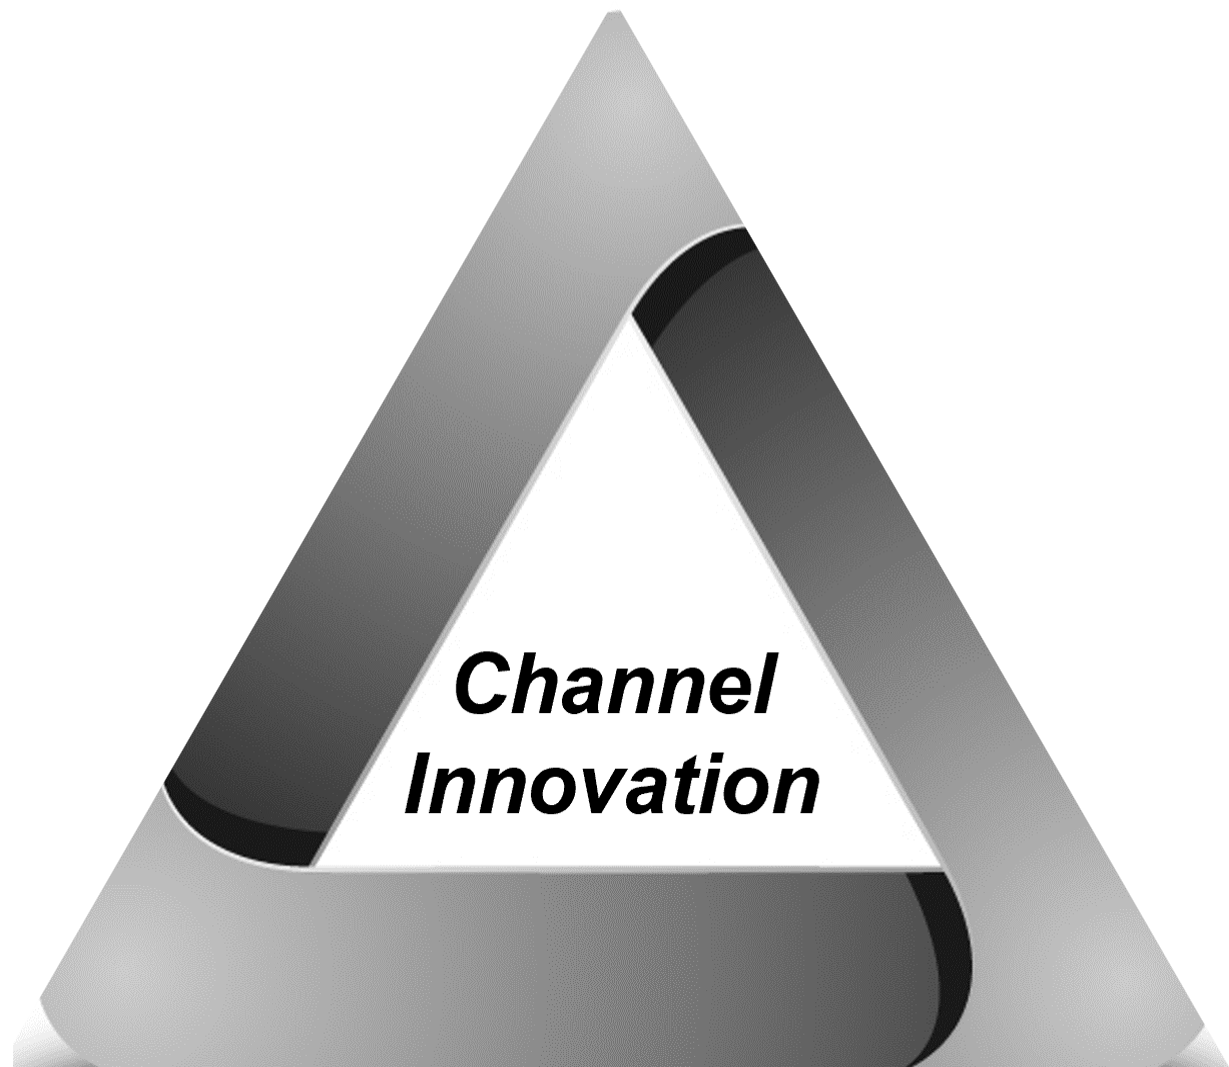 Channel Innovation